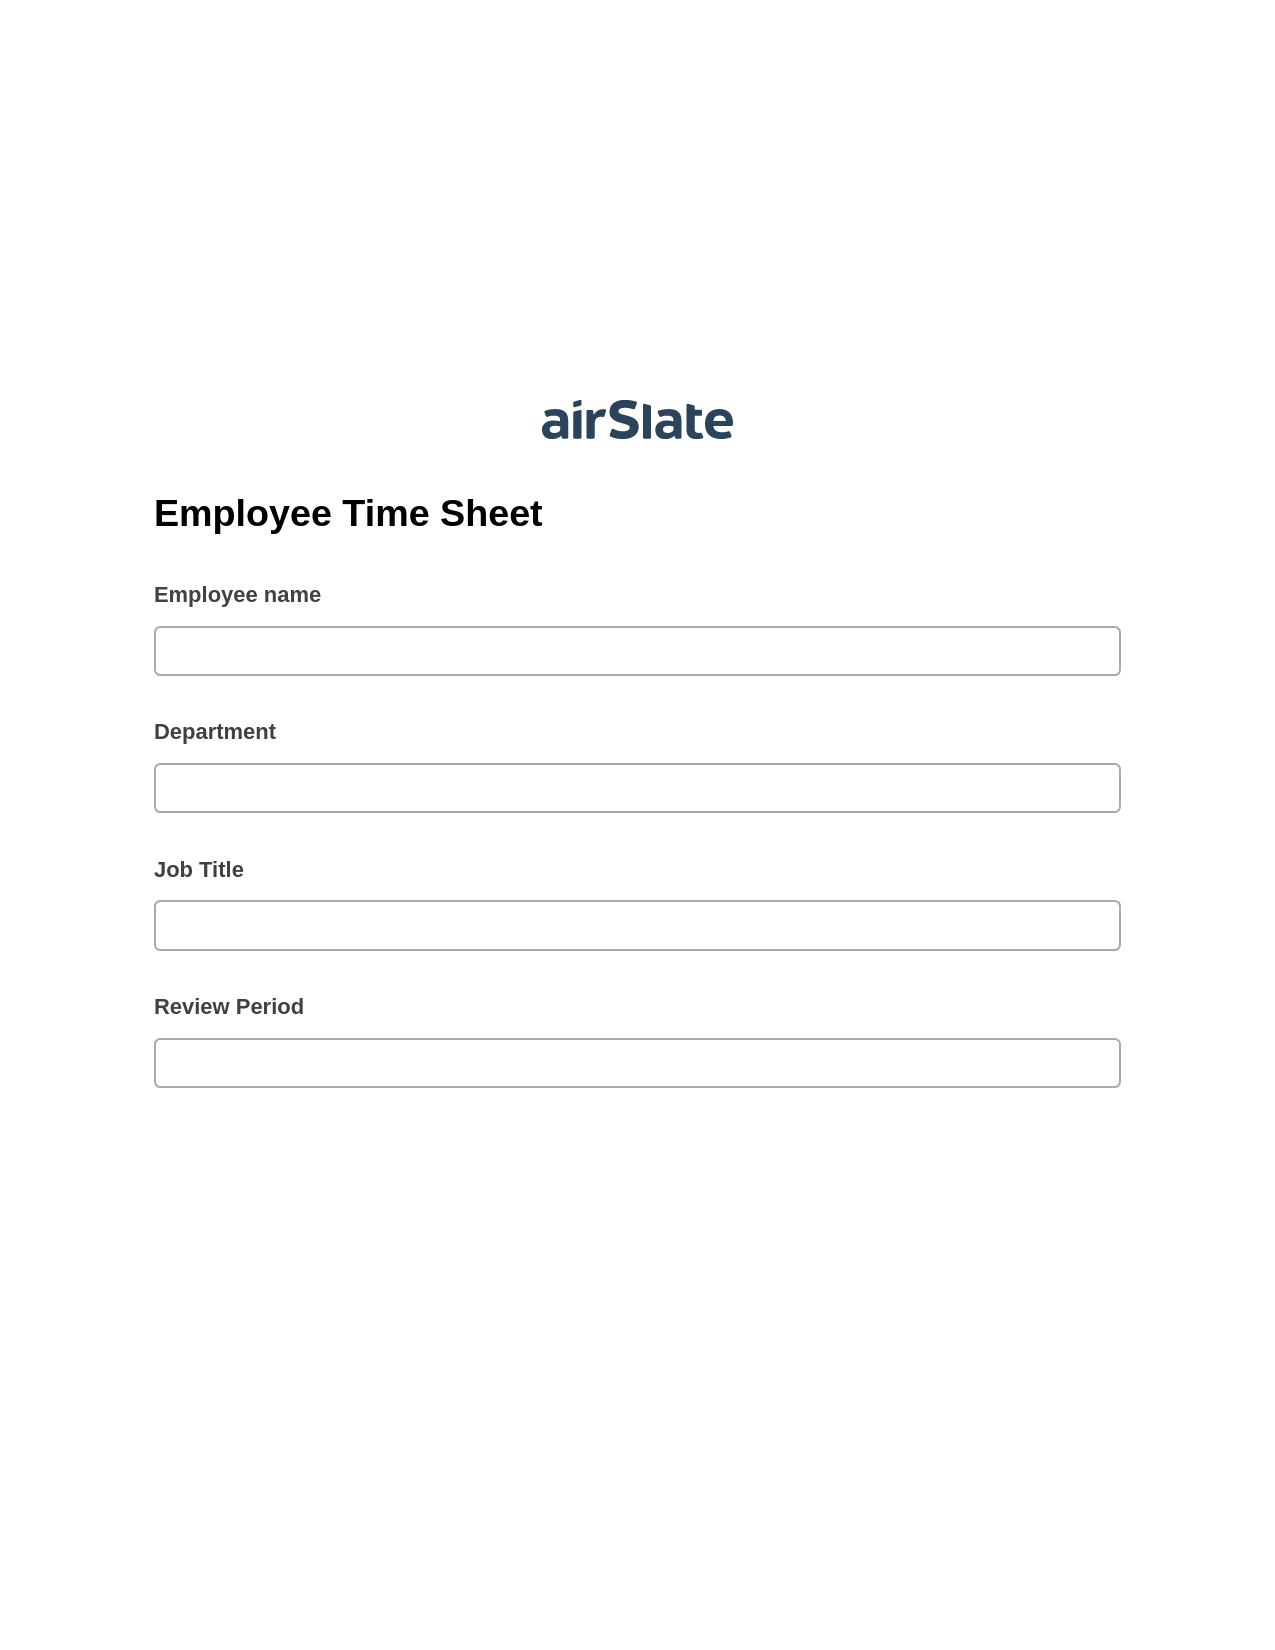 Multirole Employee Time Sheet Pre-fill from MySQL Bot, Create Slate every Google Sheet Update Bot, Archive to Google Drive Bot